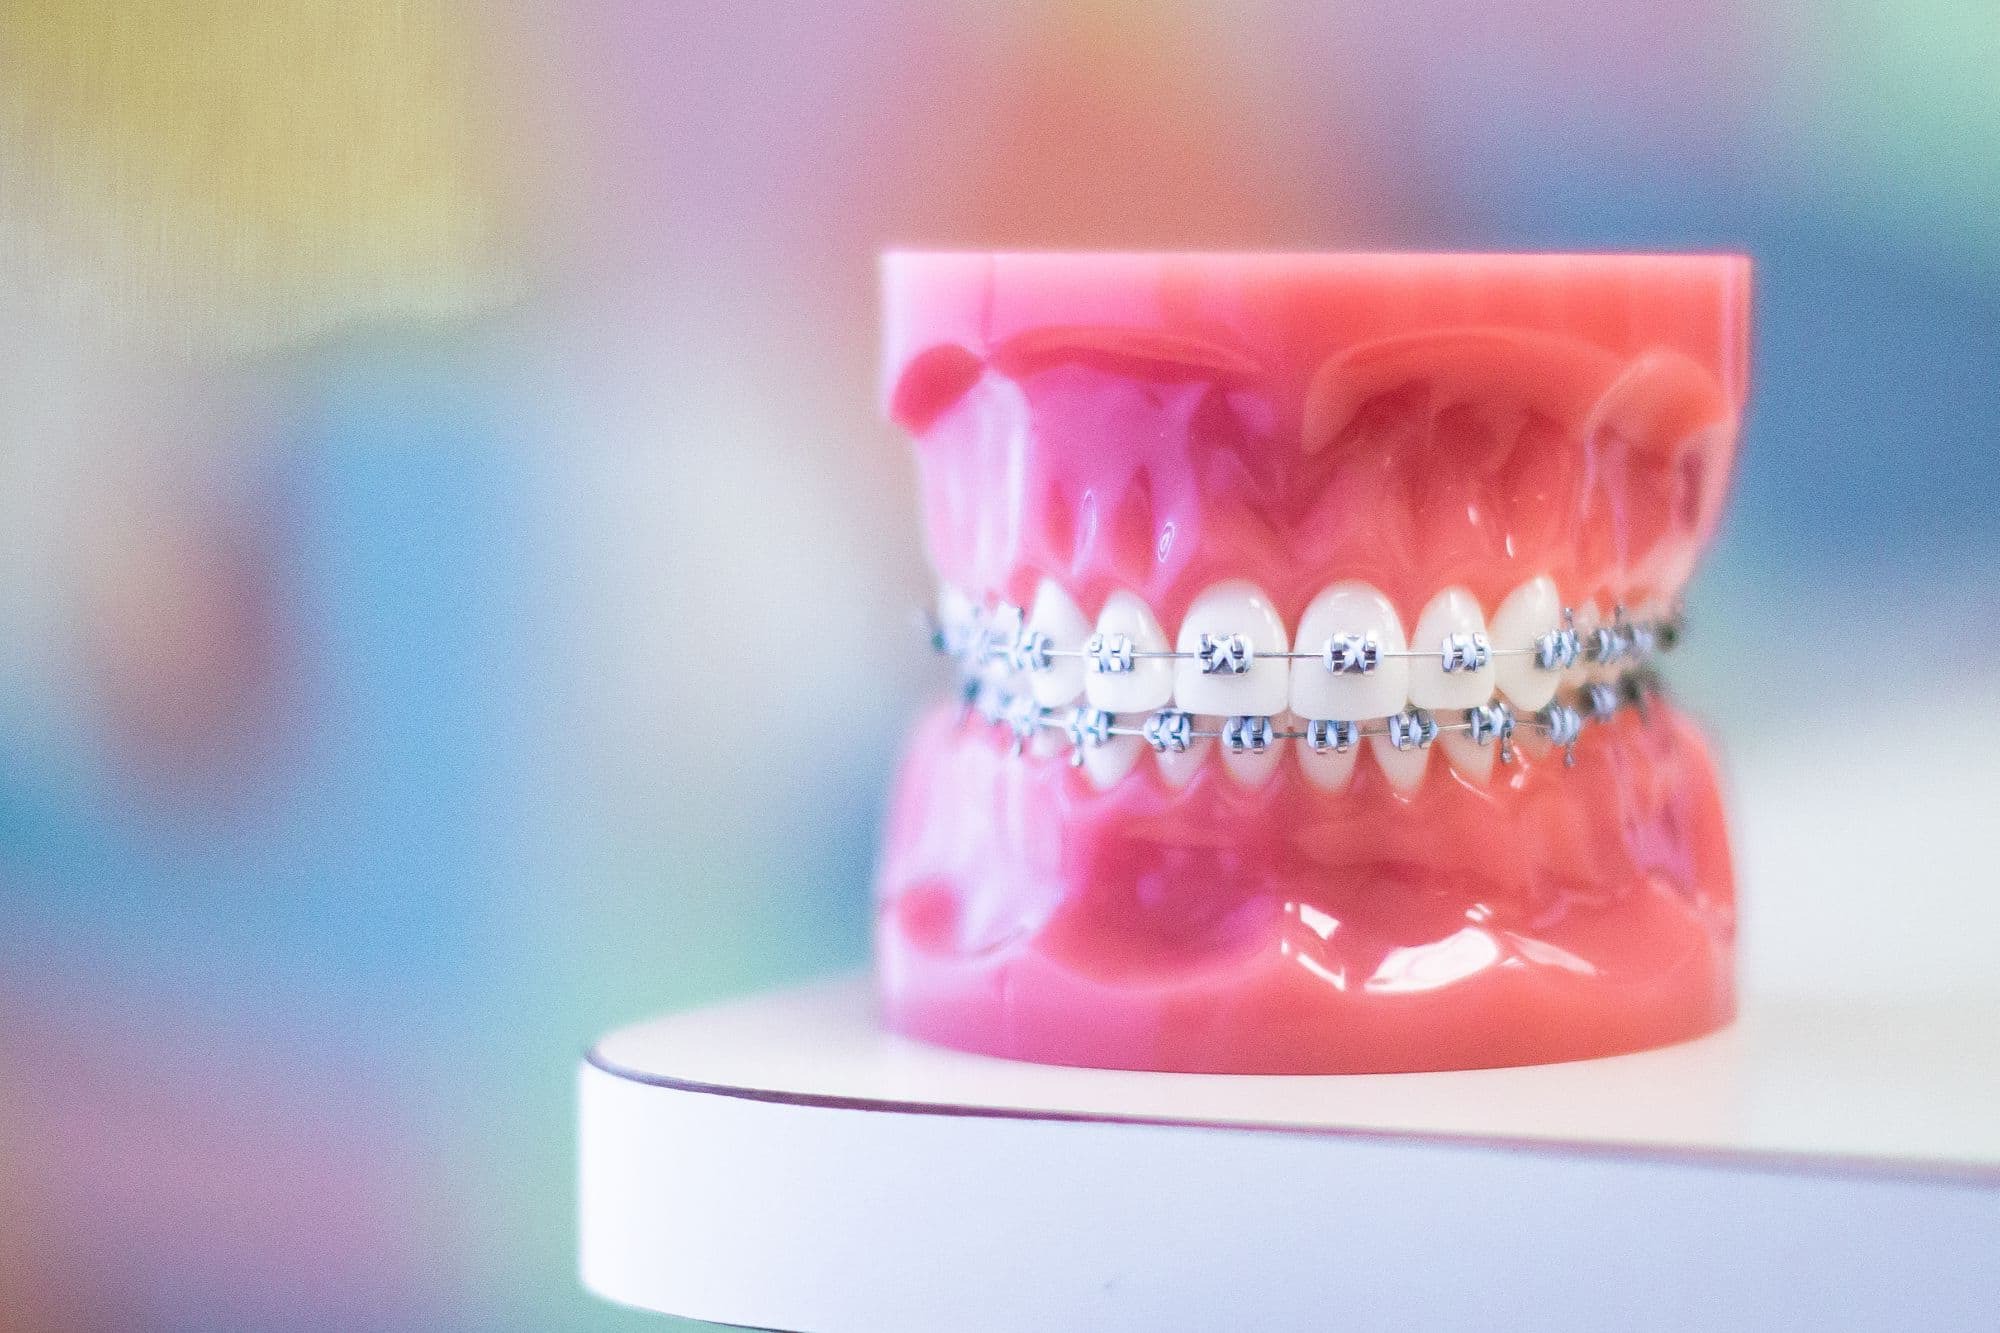 metal braces on plastic mouth model